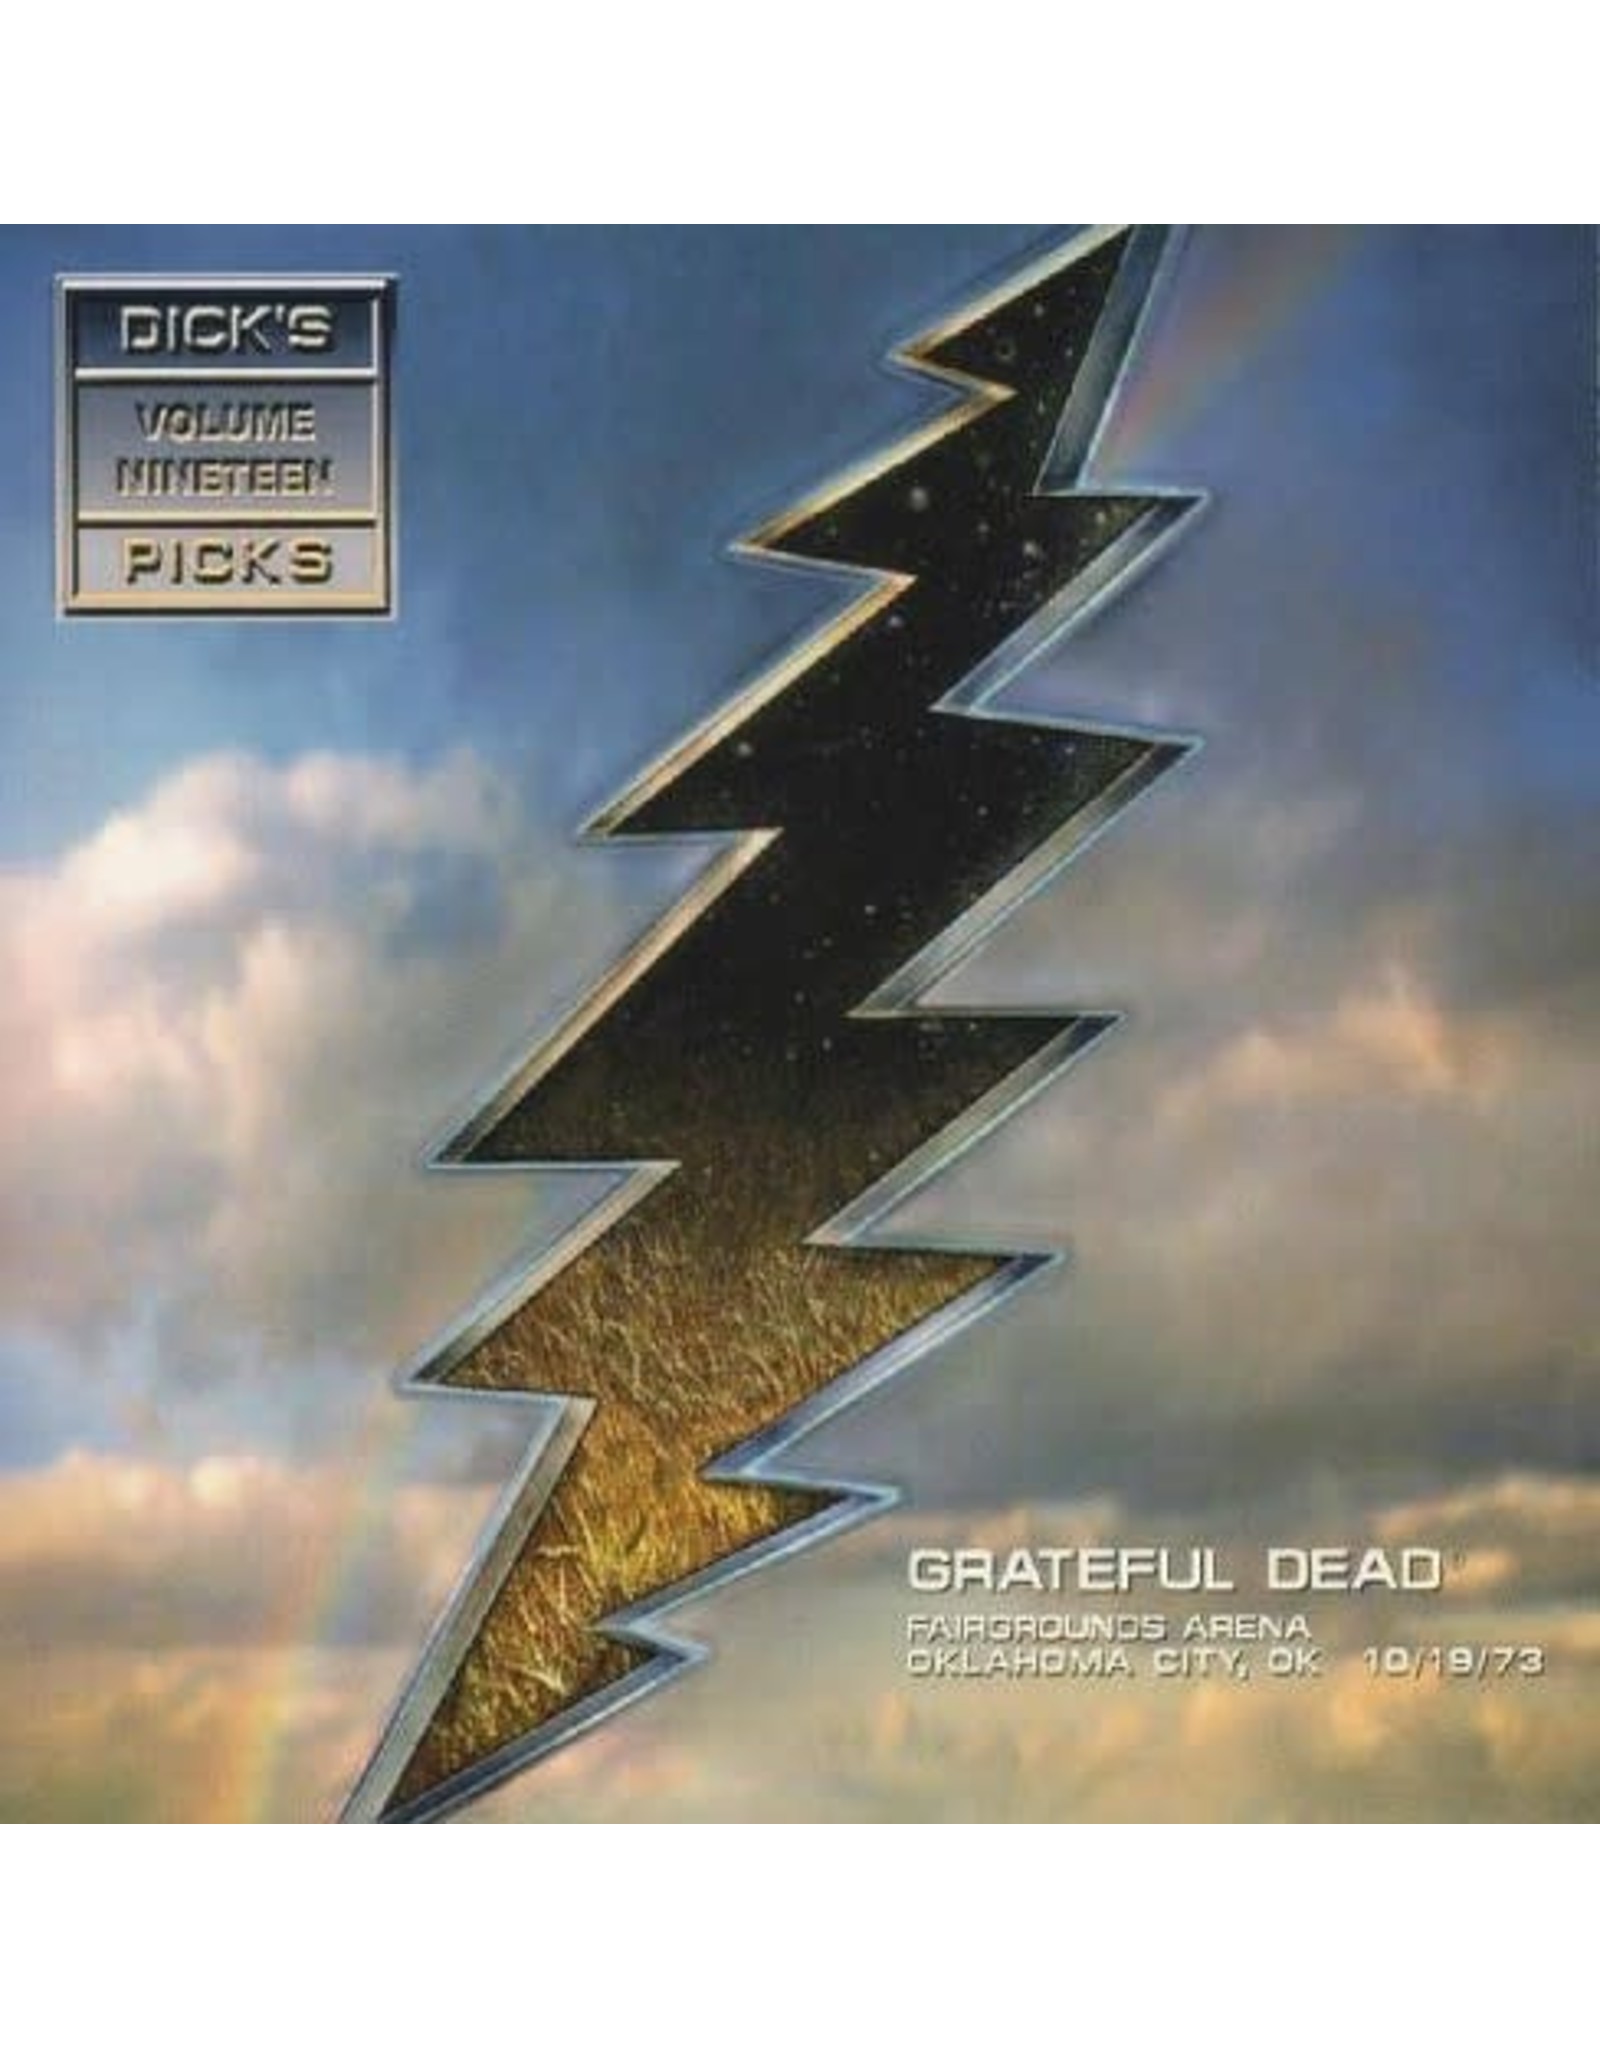 Grateful Dead - Dick's Picks Vol. 19 (Oklahoma City, OK 10/19/73) 6LP Boxset